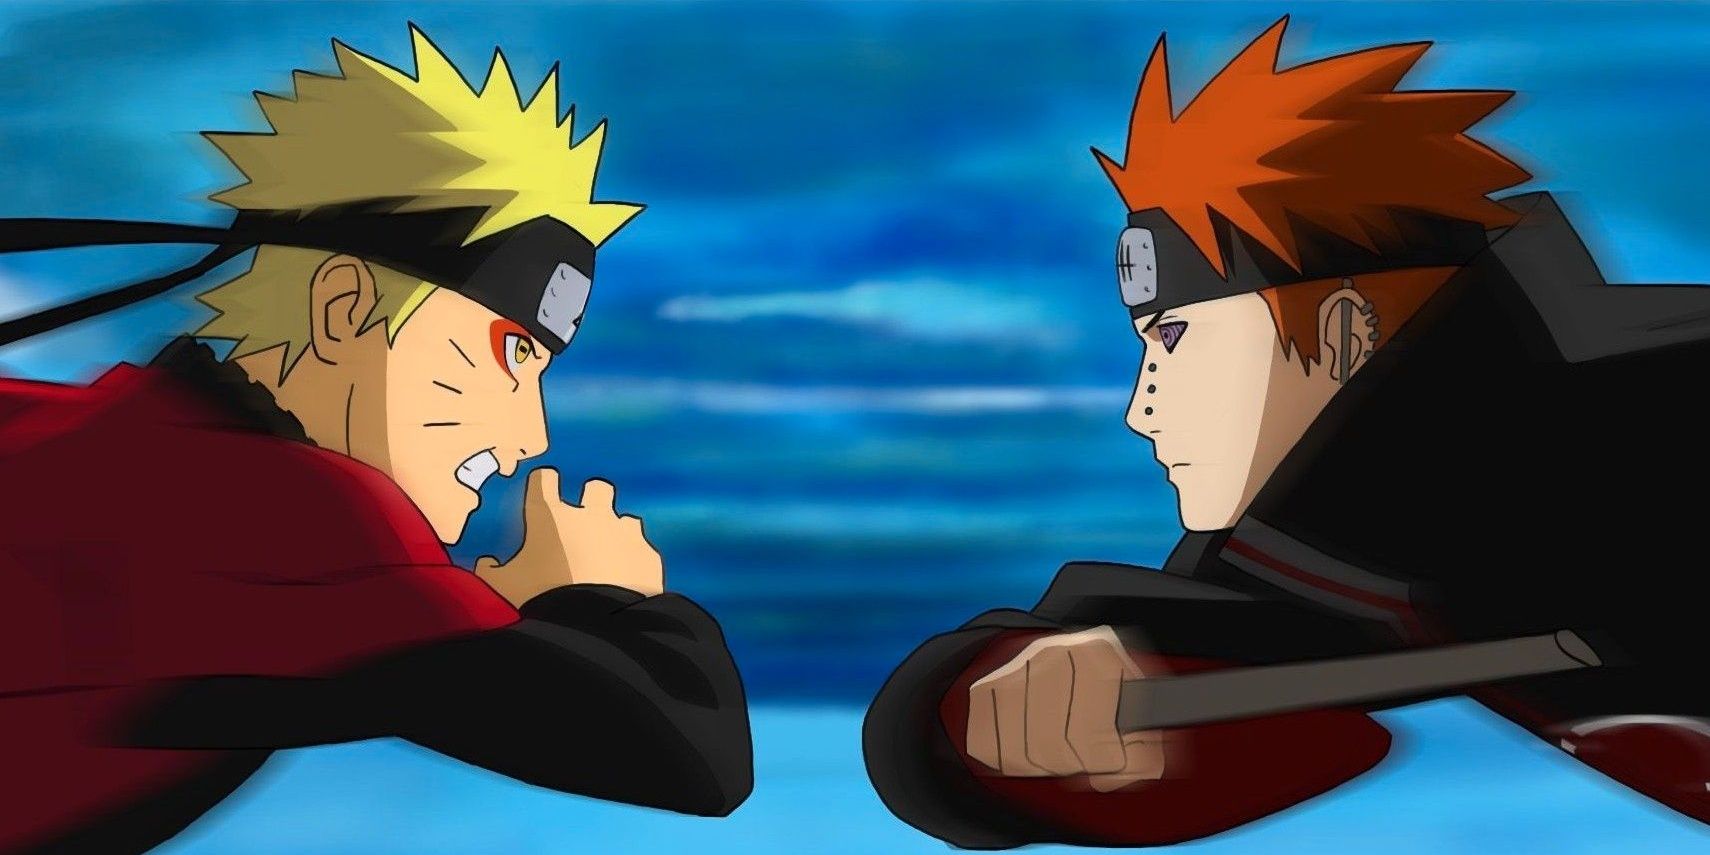 Naruto versus Pain from Naruto: Shippuden (Pain's Assault Arc)